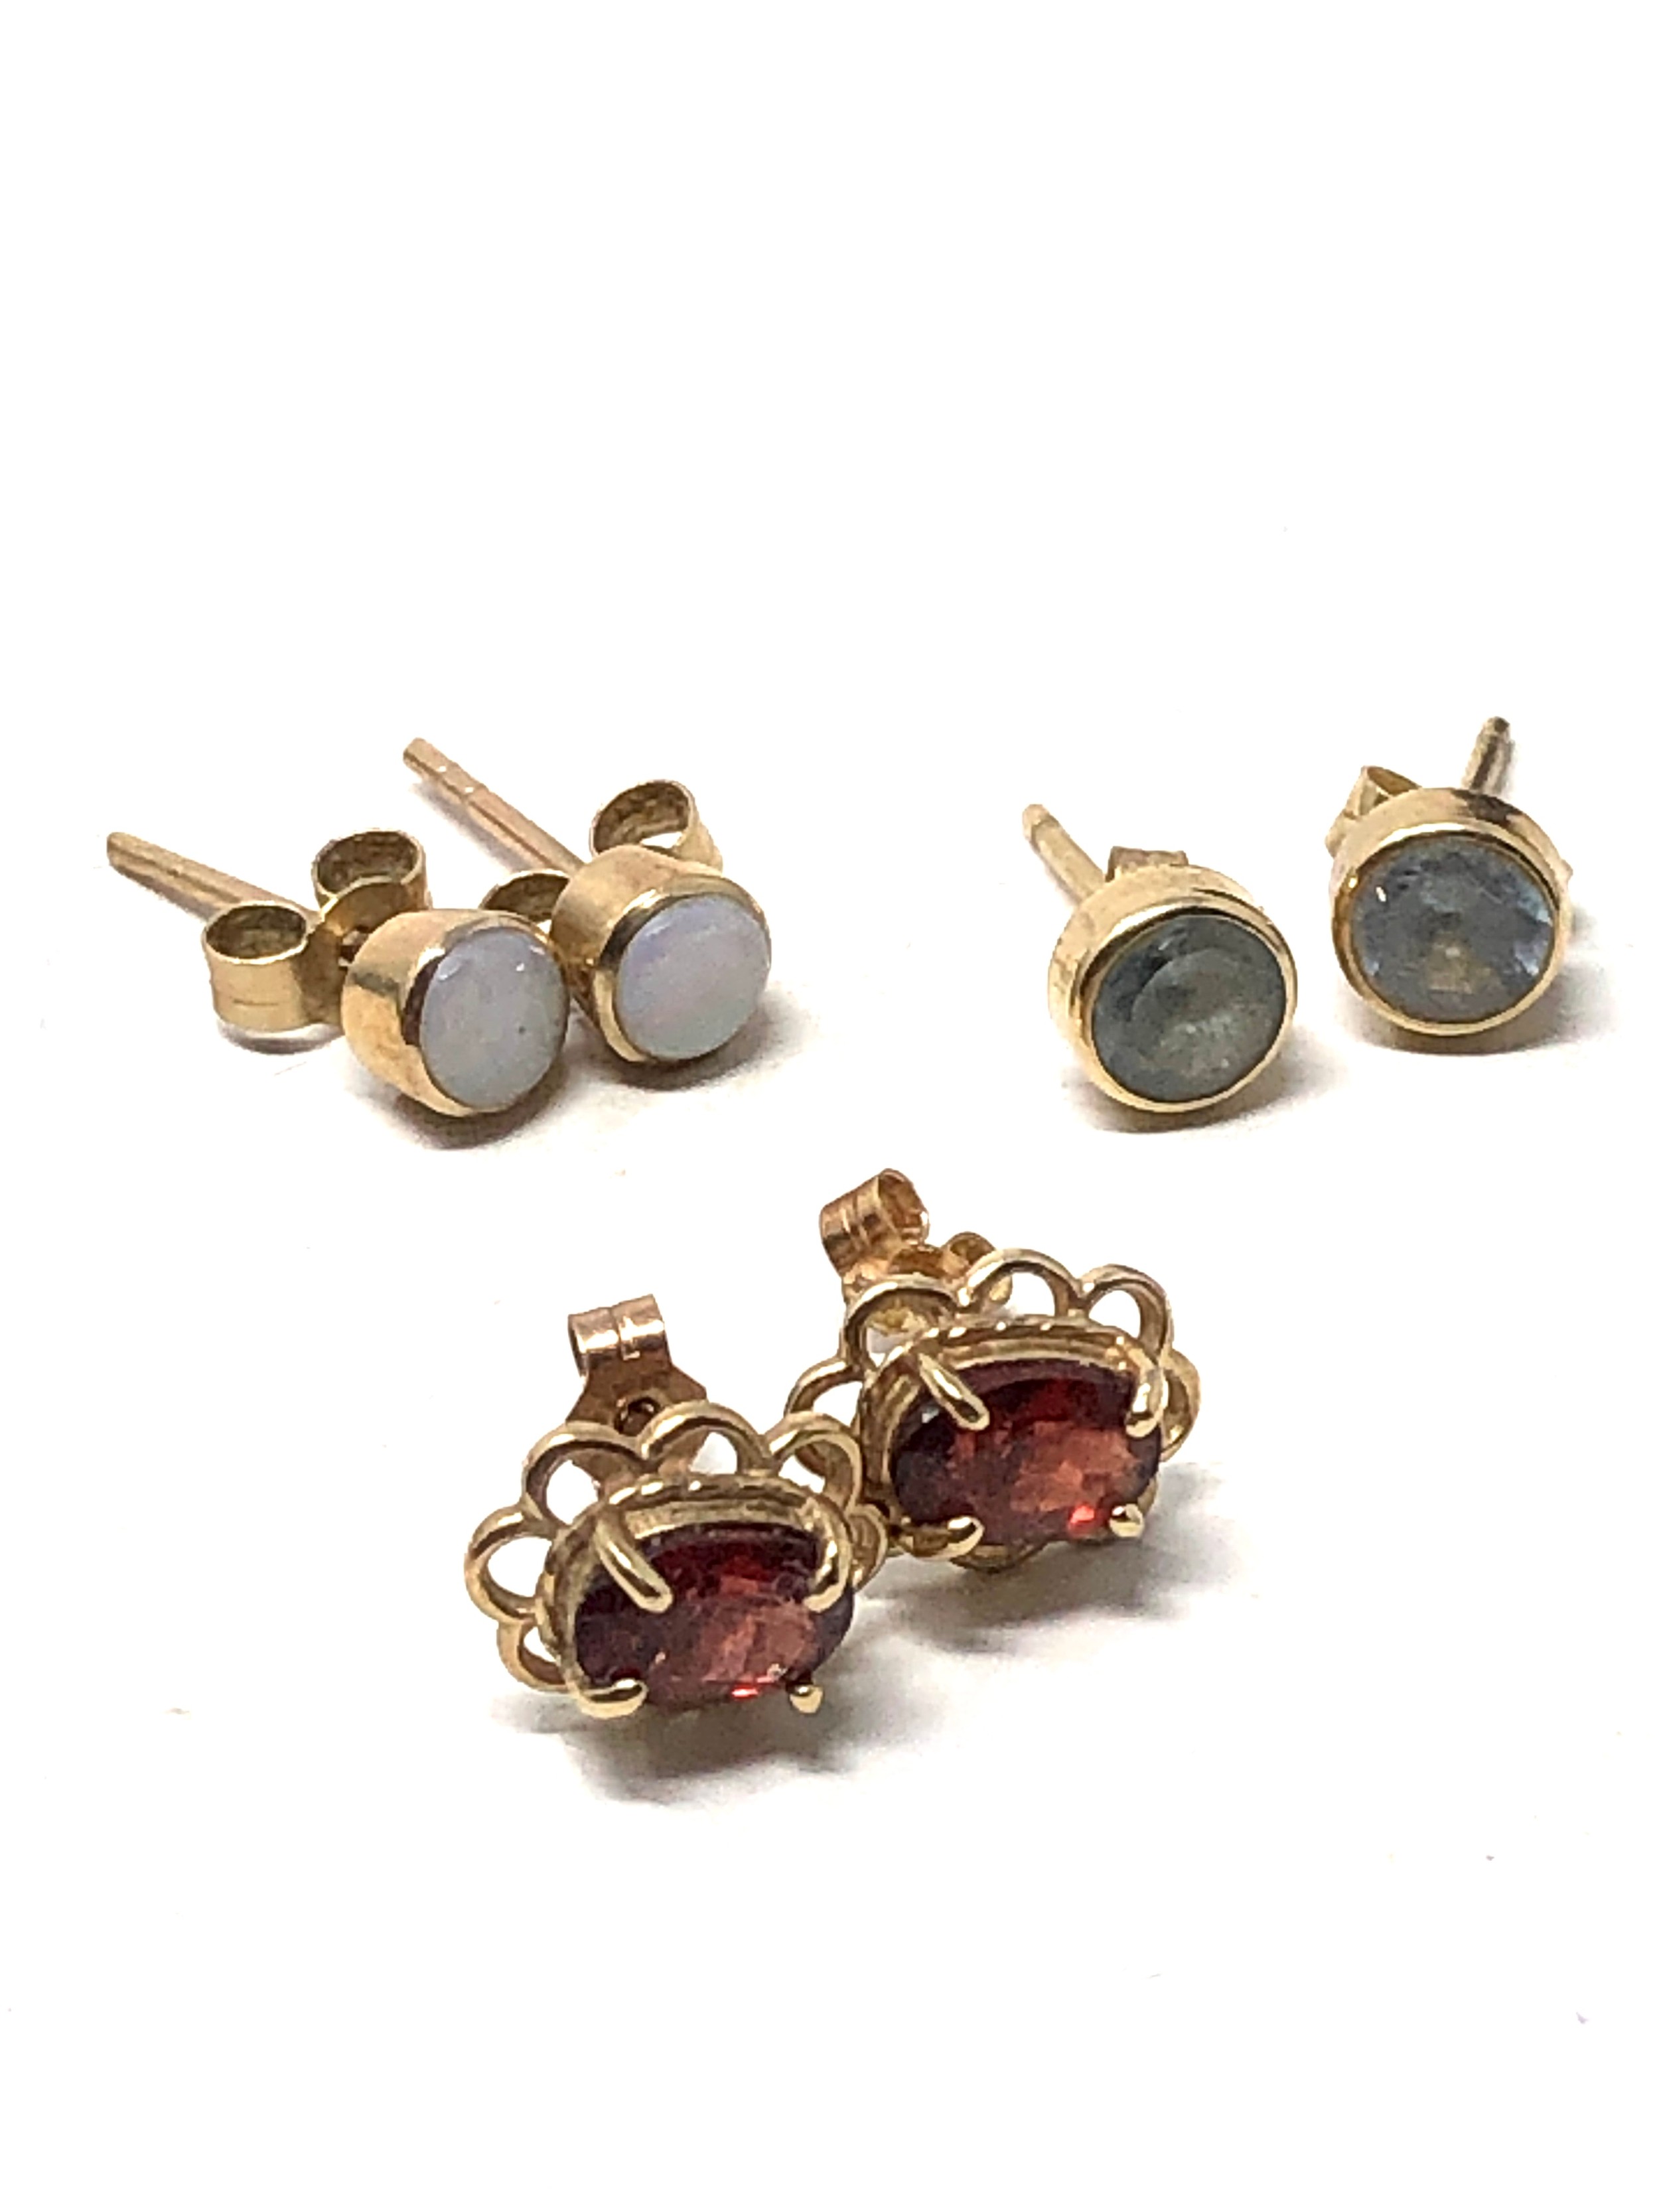 3 x 9ct gold paired gemstone stud earrings inc. topaz, garnet & opal (2.3g) - Image 2 of 2